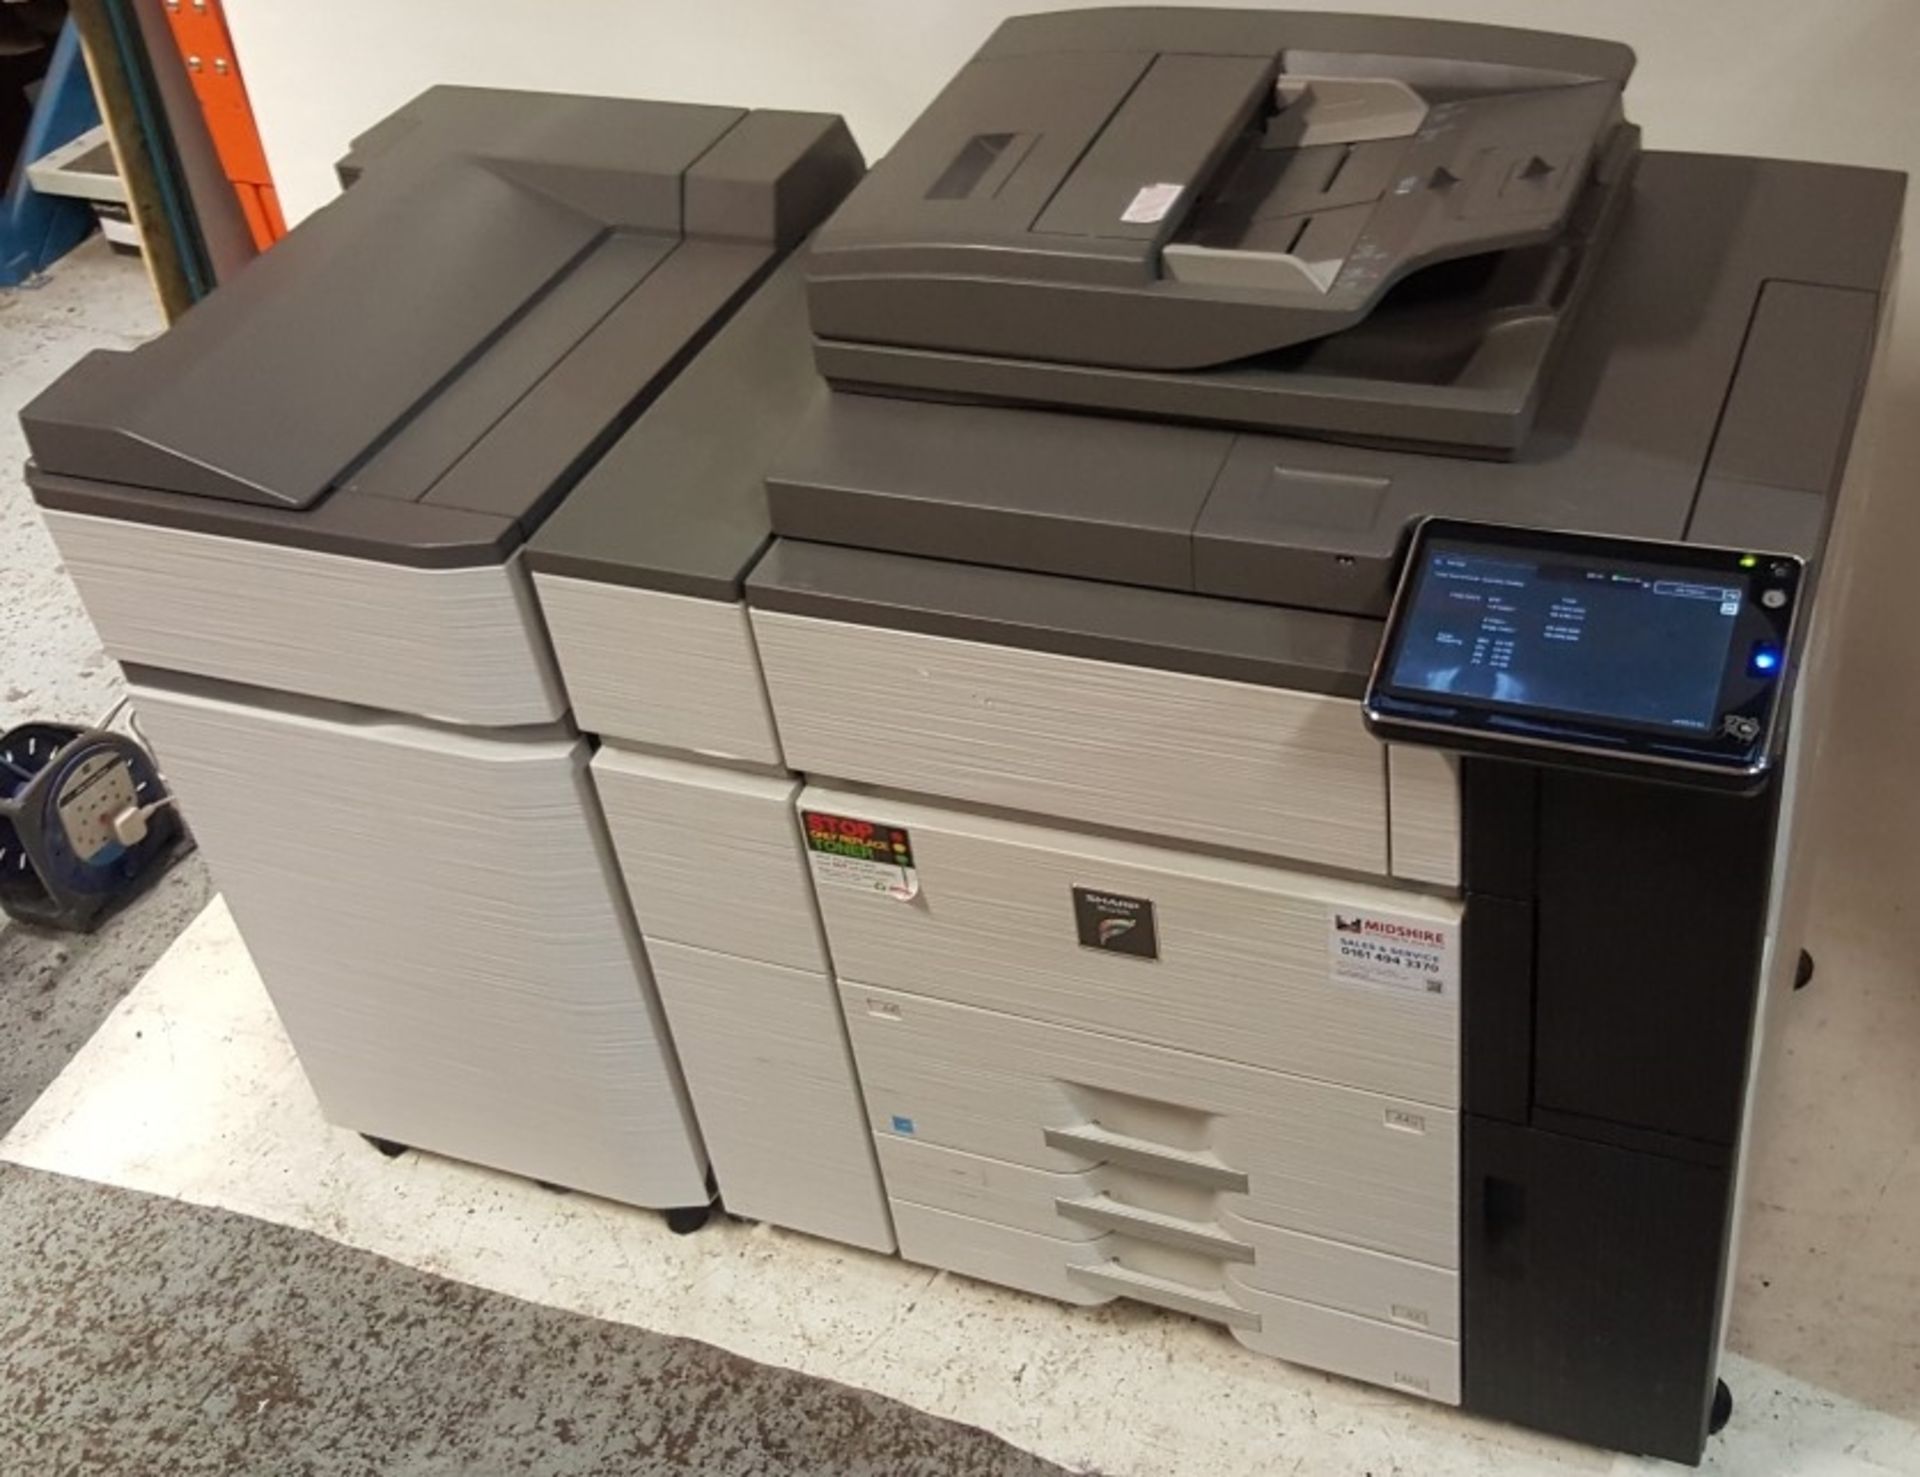 1 x Sharp MX6240N Office Photocopier Printer With Saddle Stitch Finisher & Curl Correction Unit - - Image 4 of 9